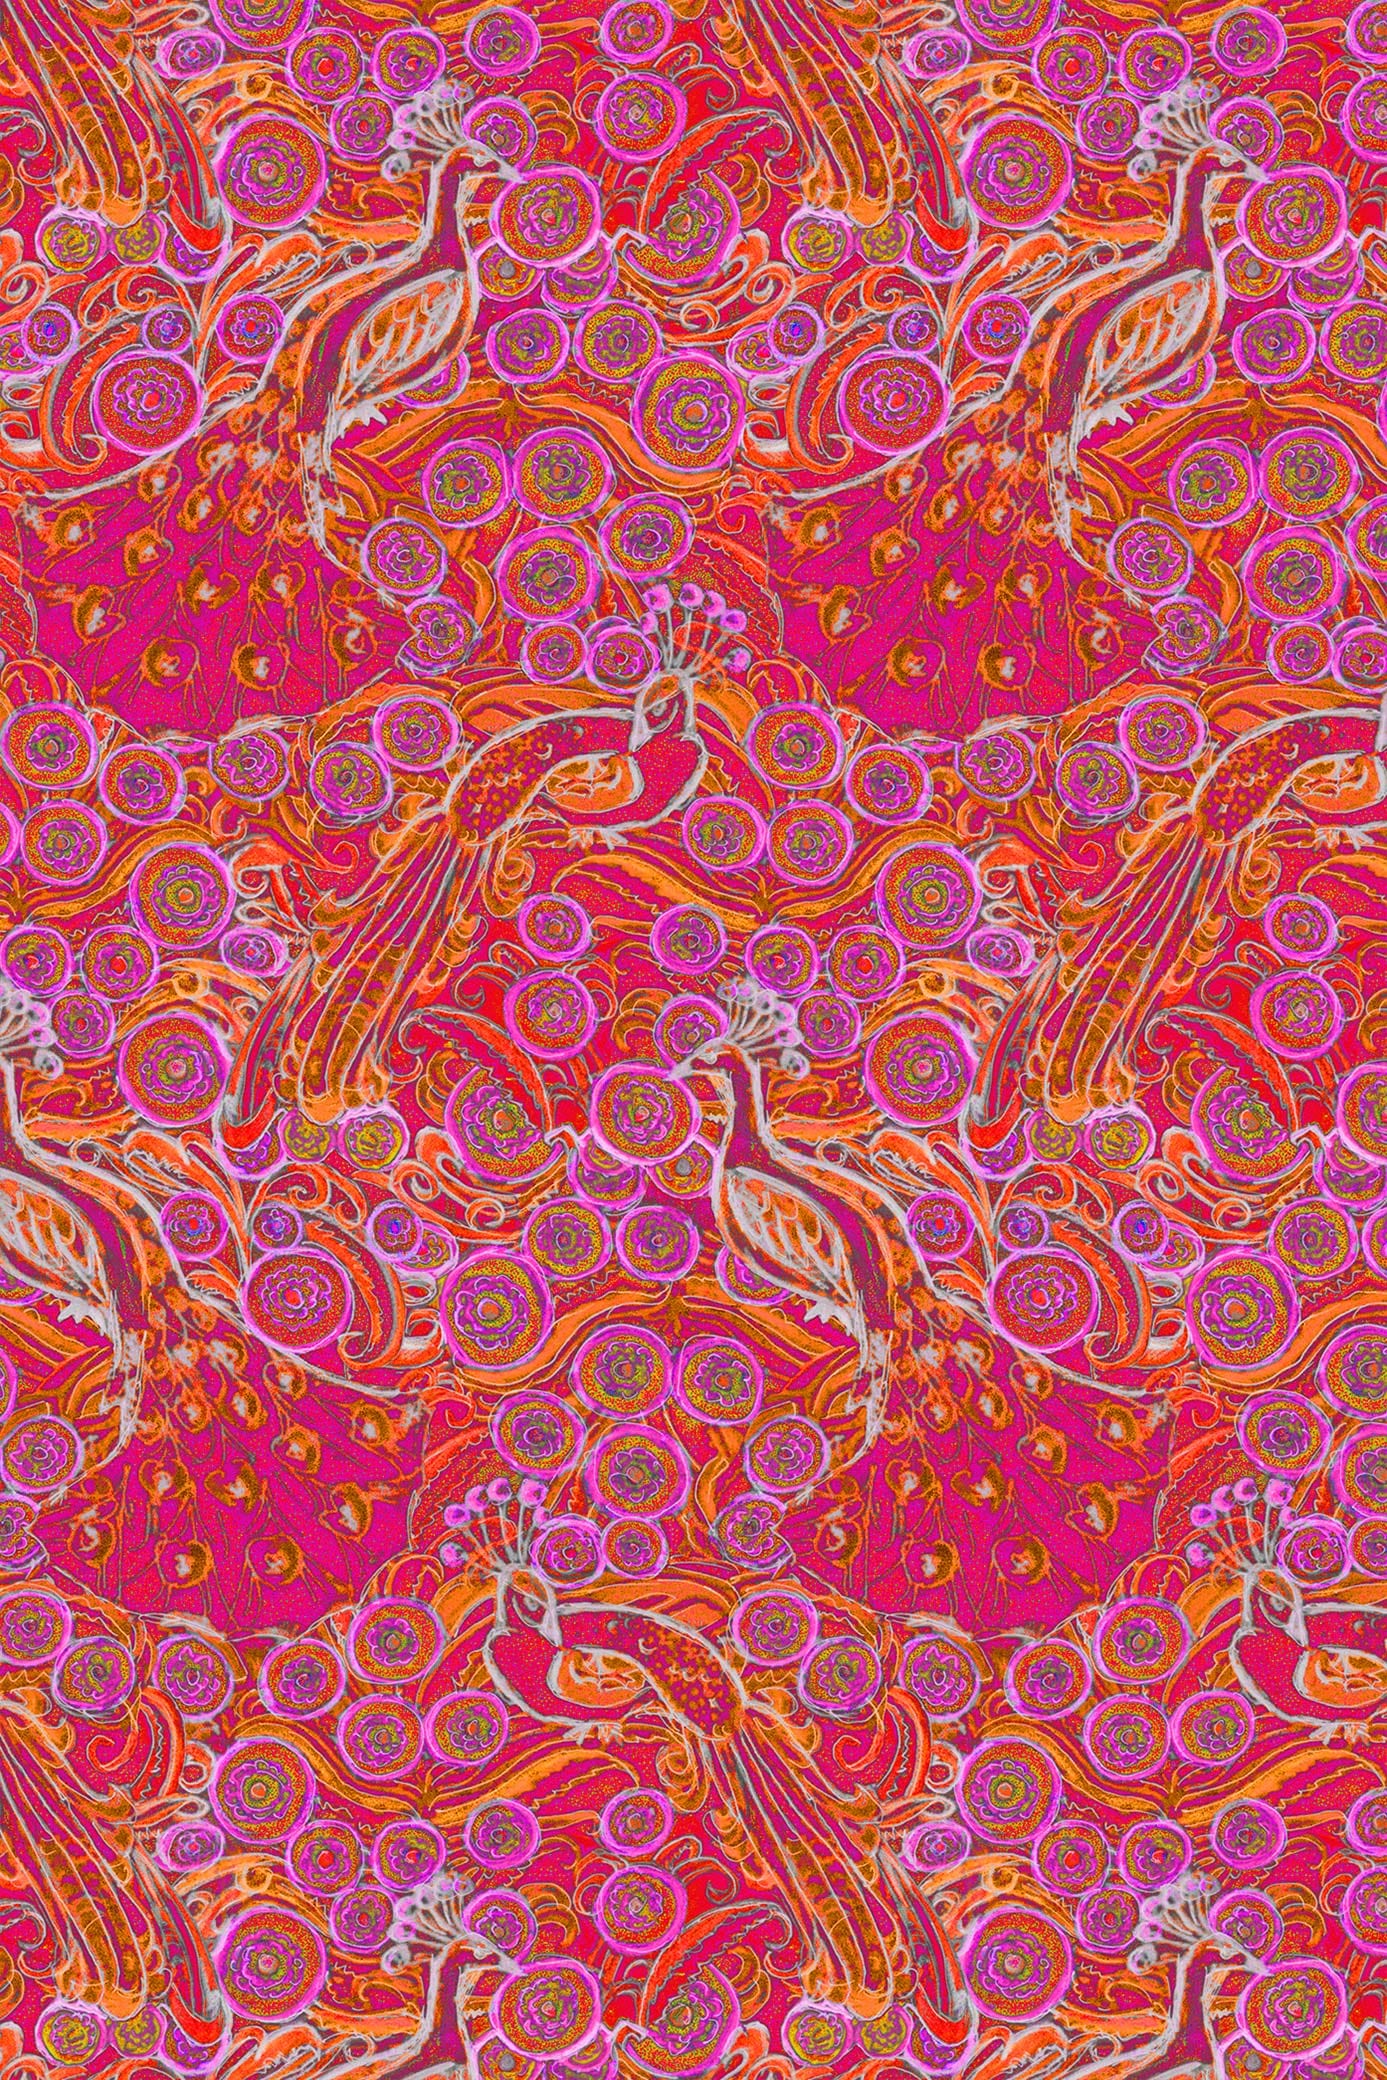 W.E.T. by Ines Schneider Pants Pants Pescata 22 / Pavone mode hamburg print sommerkleid Unique Prints Summer Dress Handdesignierte Prints Print